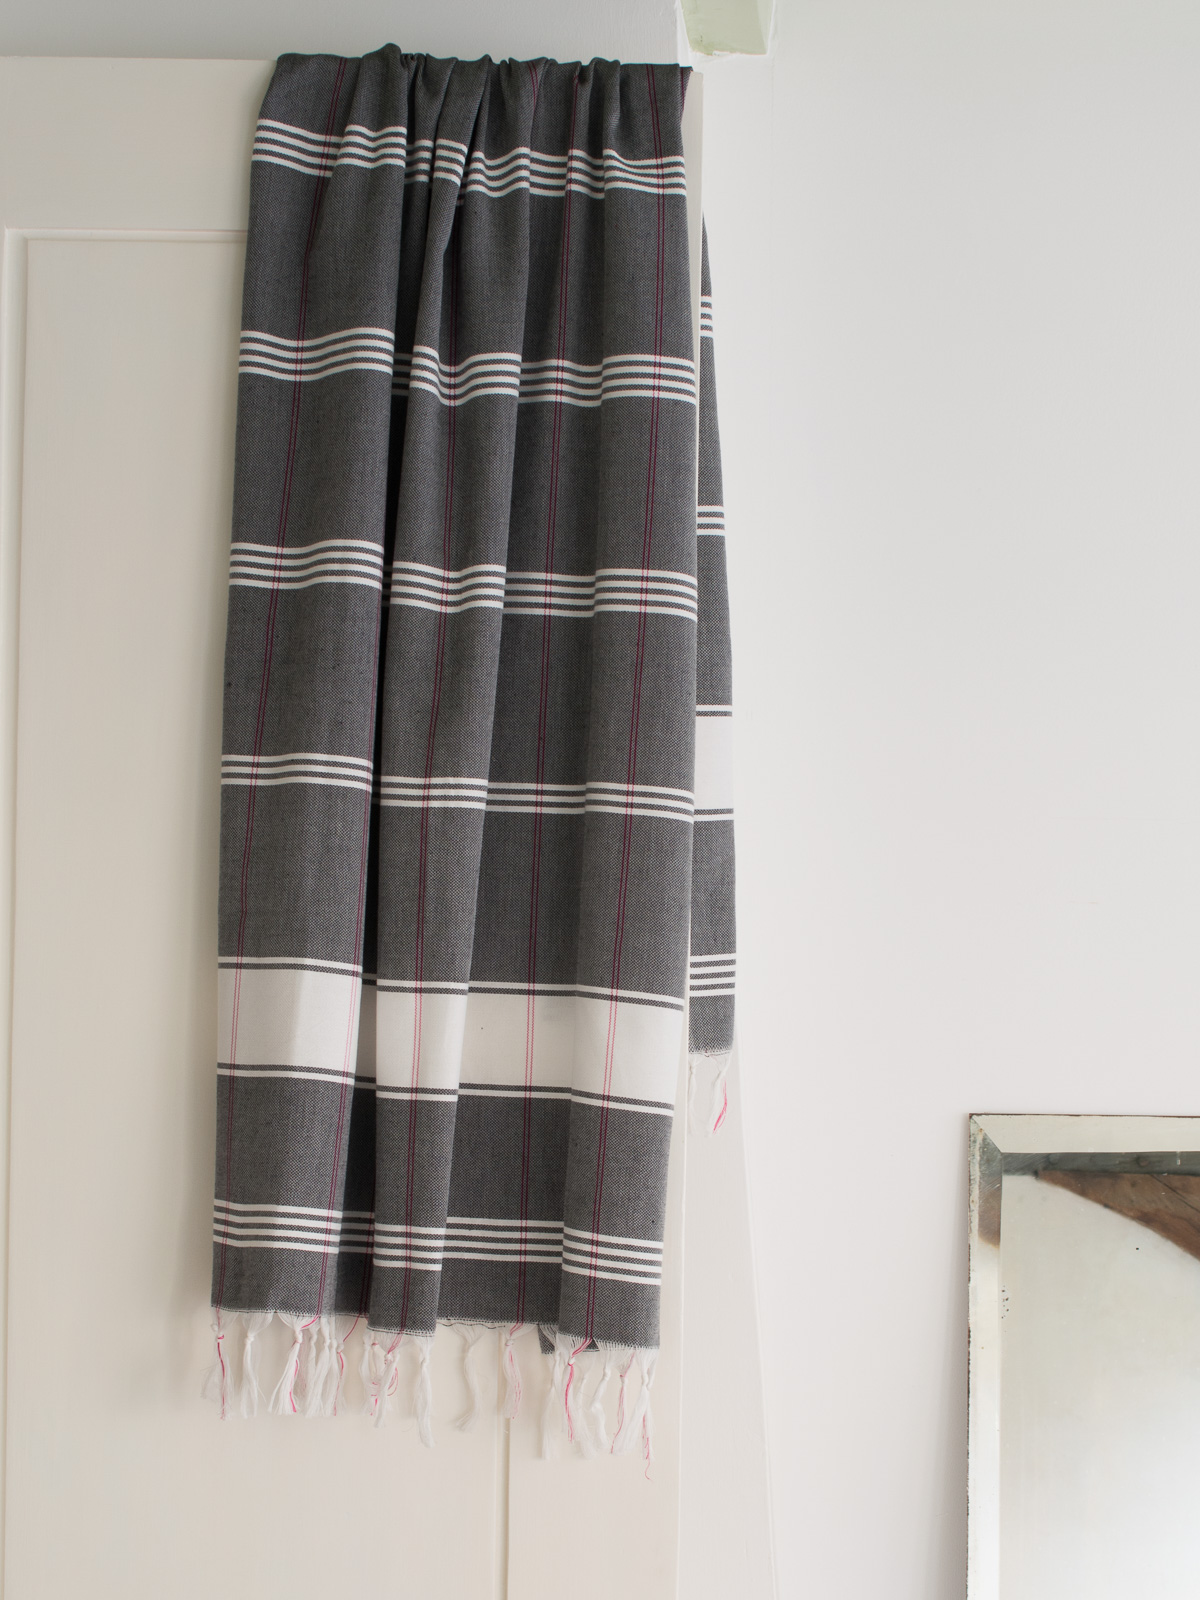 hammam towel checkered black/white